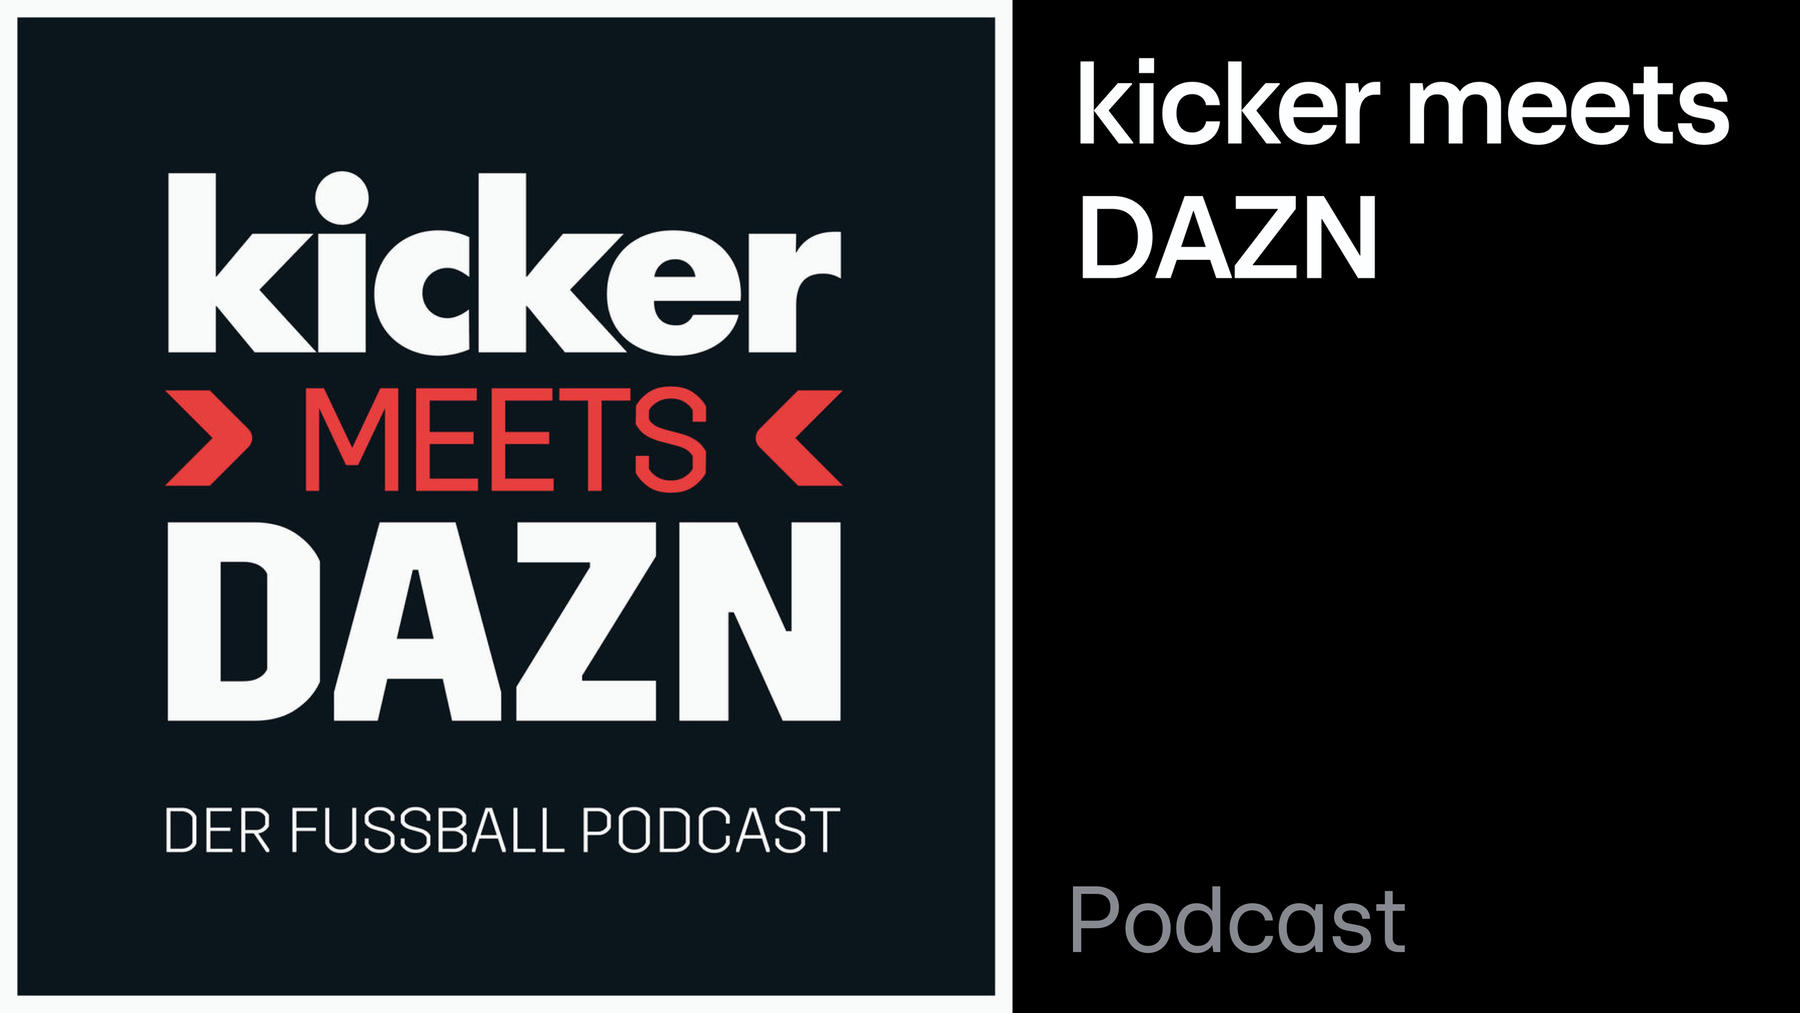 Podcast: Kicker meets DAZN